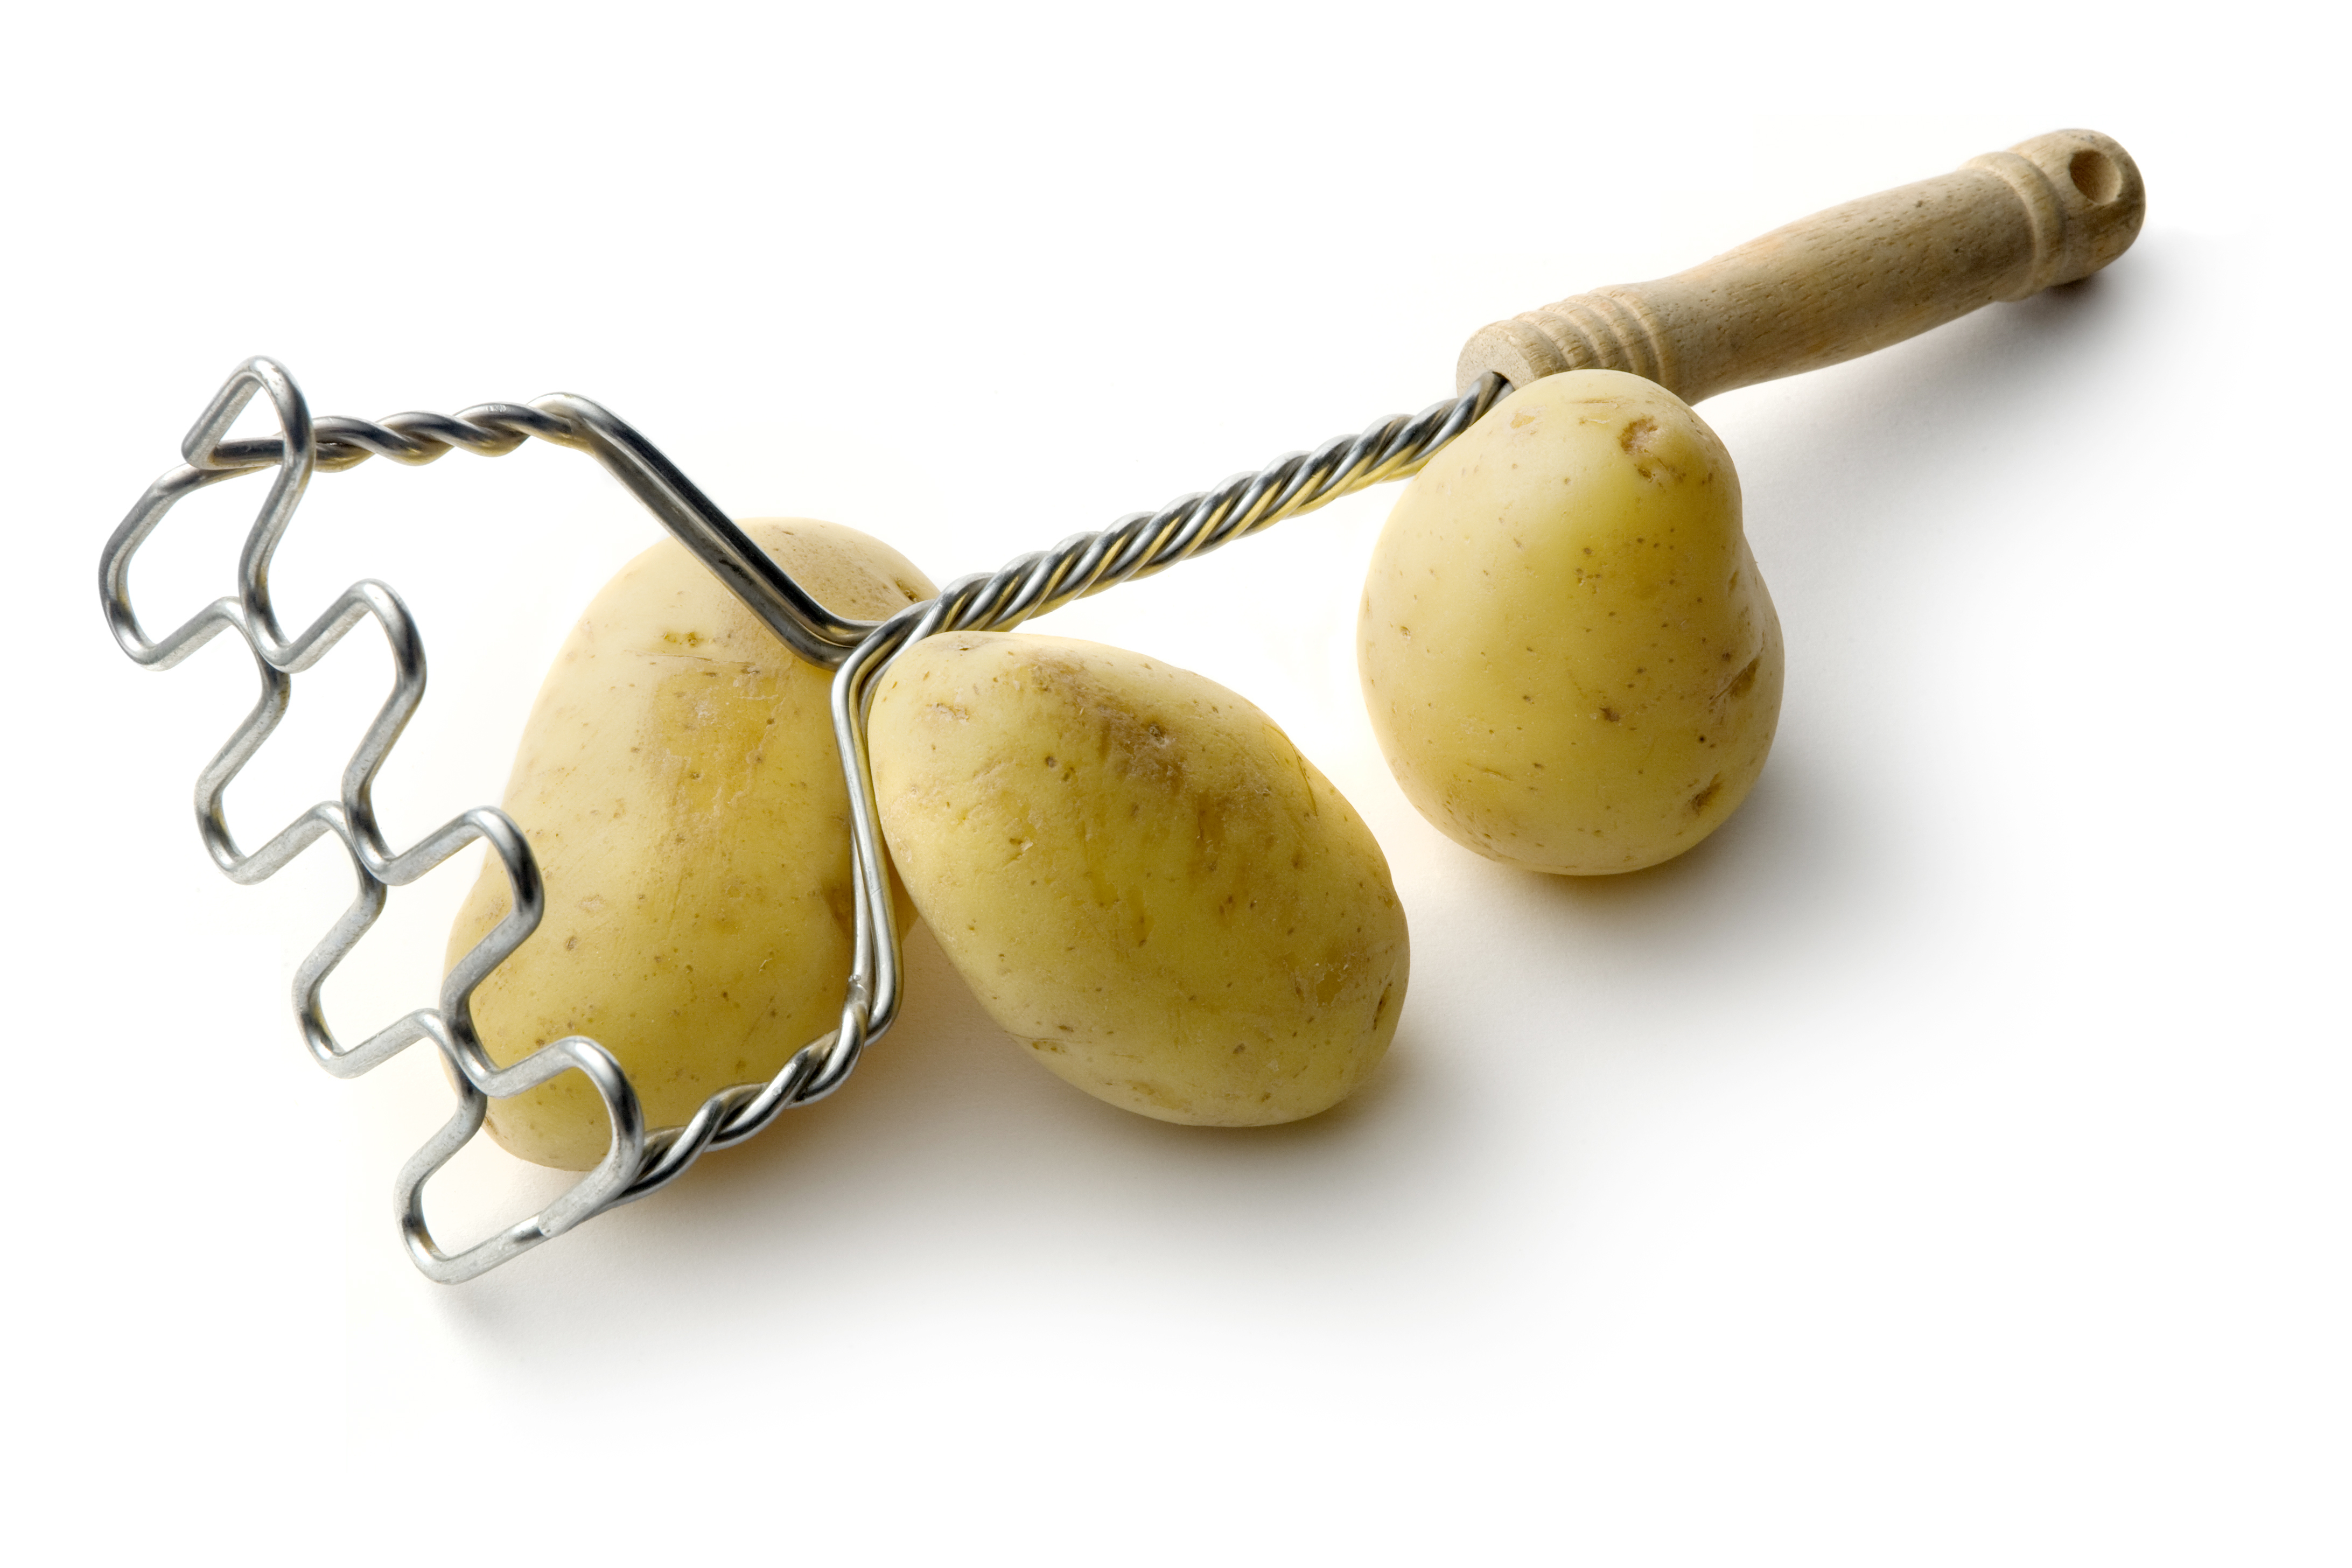 OXO Adjustable Potato Ricer Review 2022